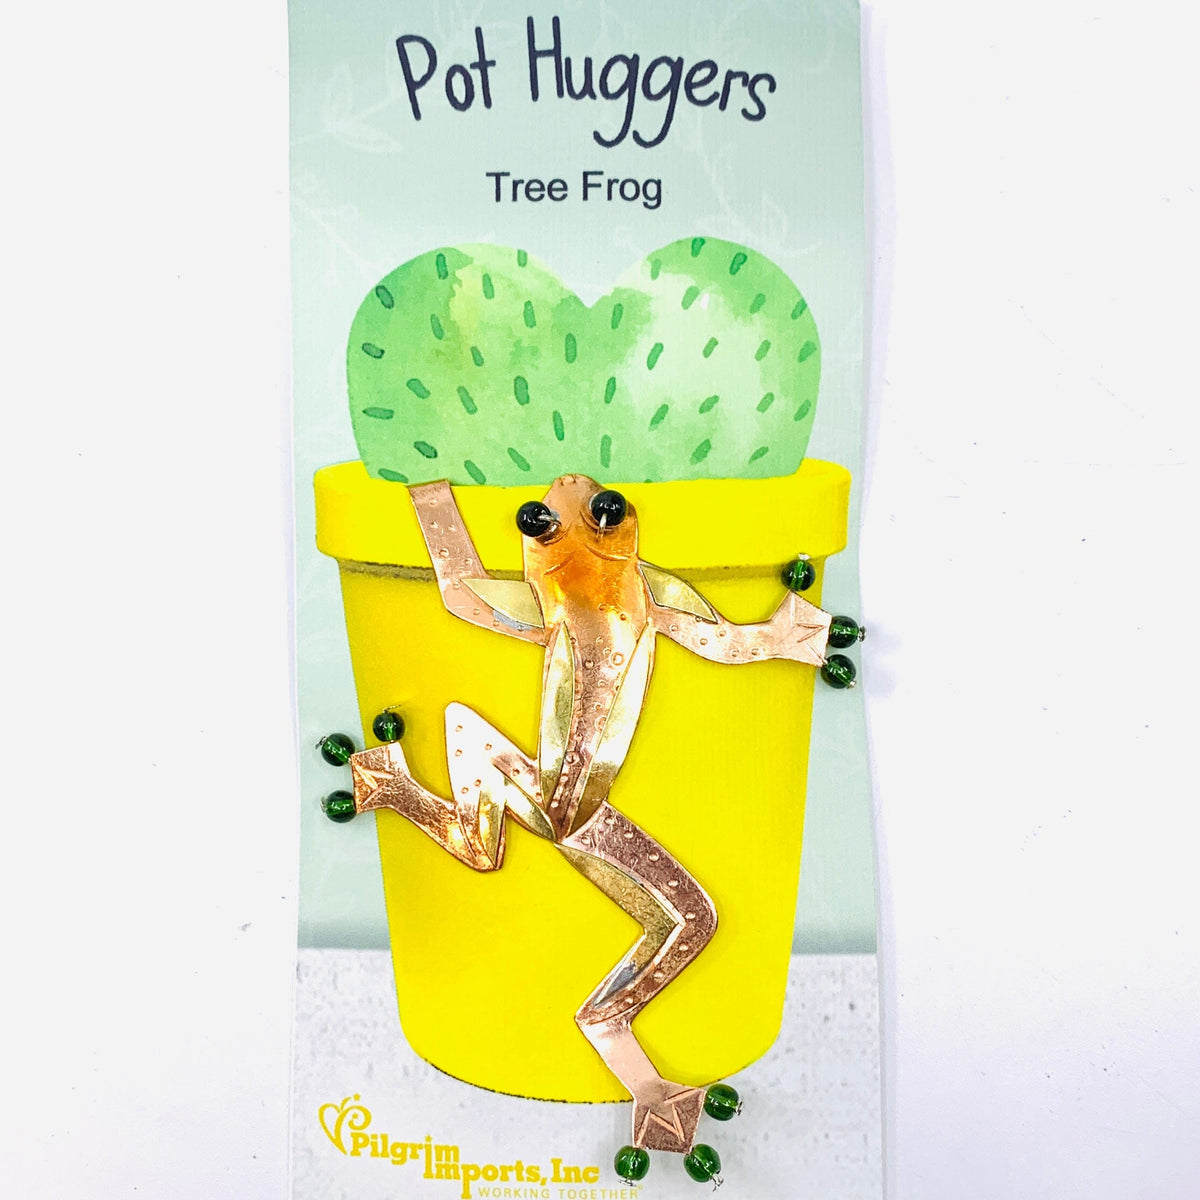 Pot Huggers 19, Tree Frog